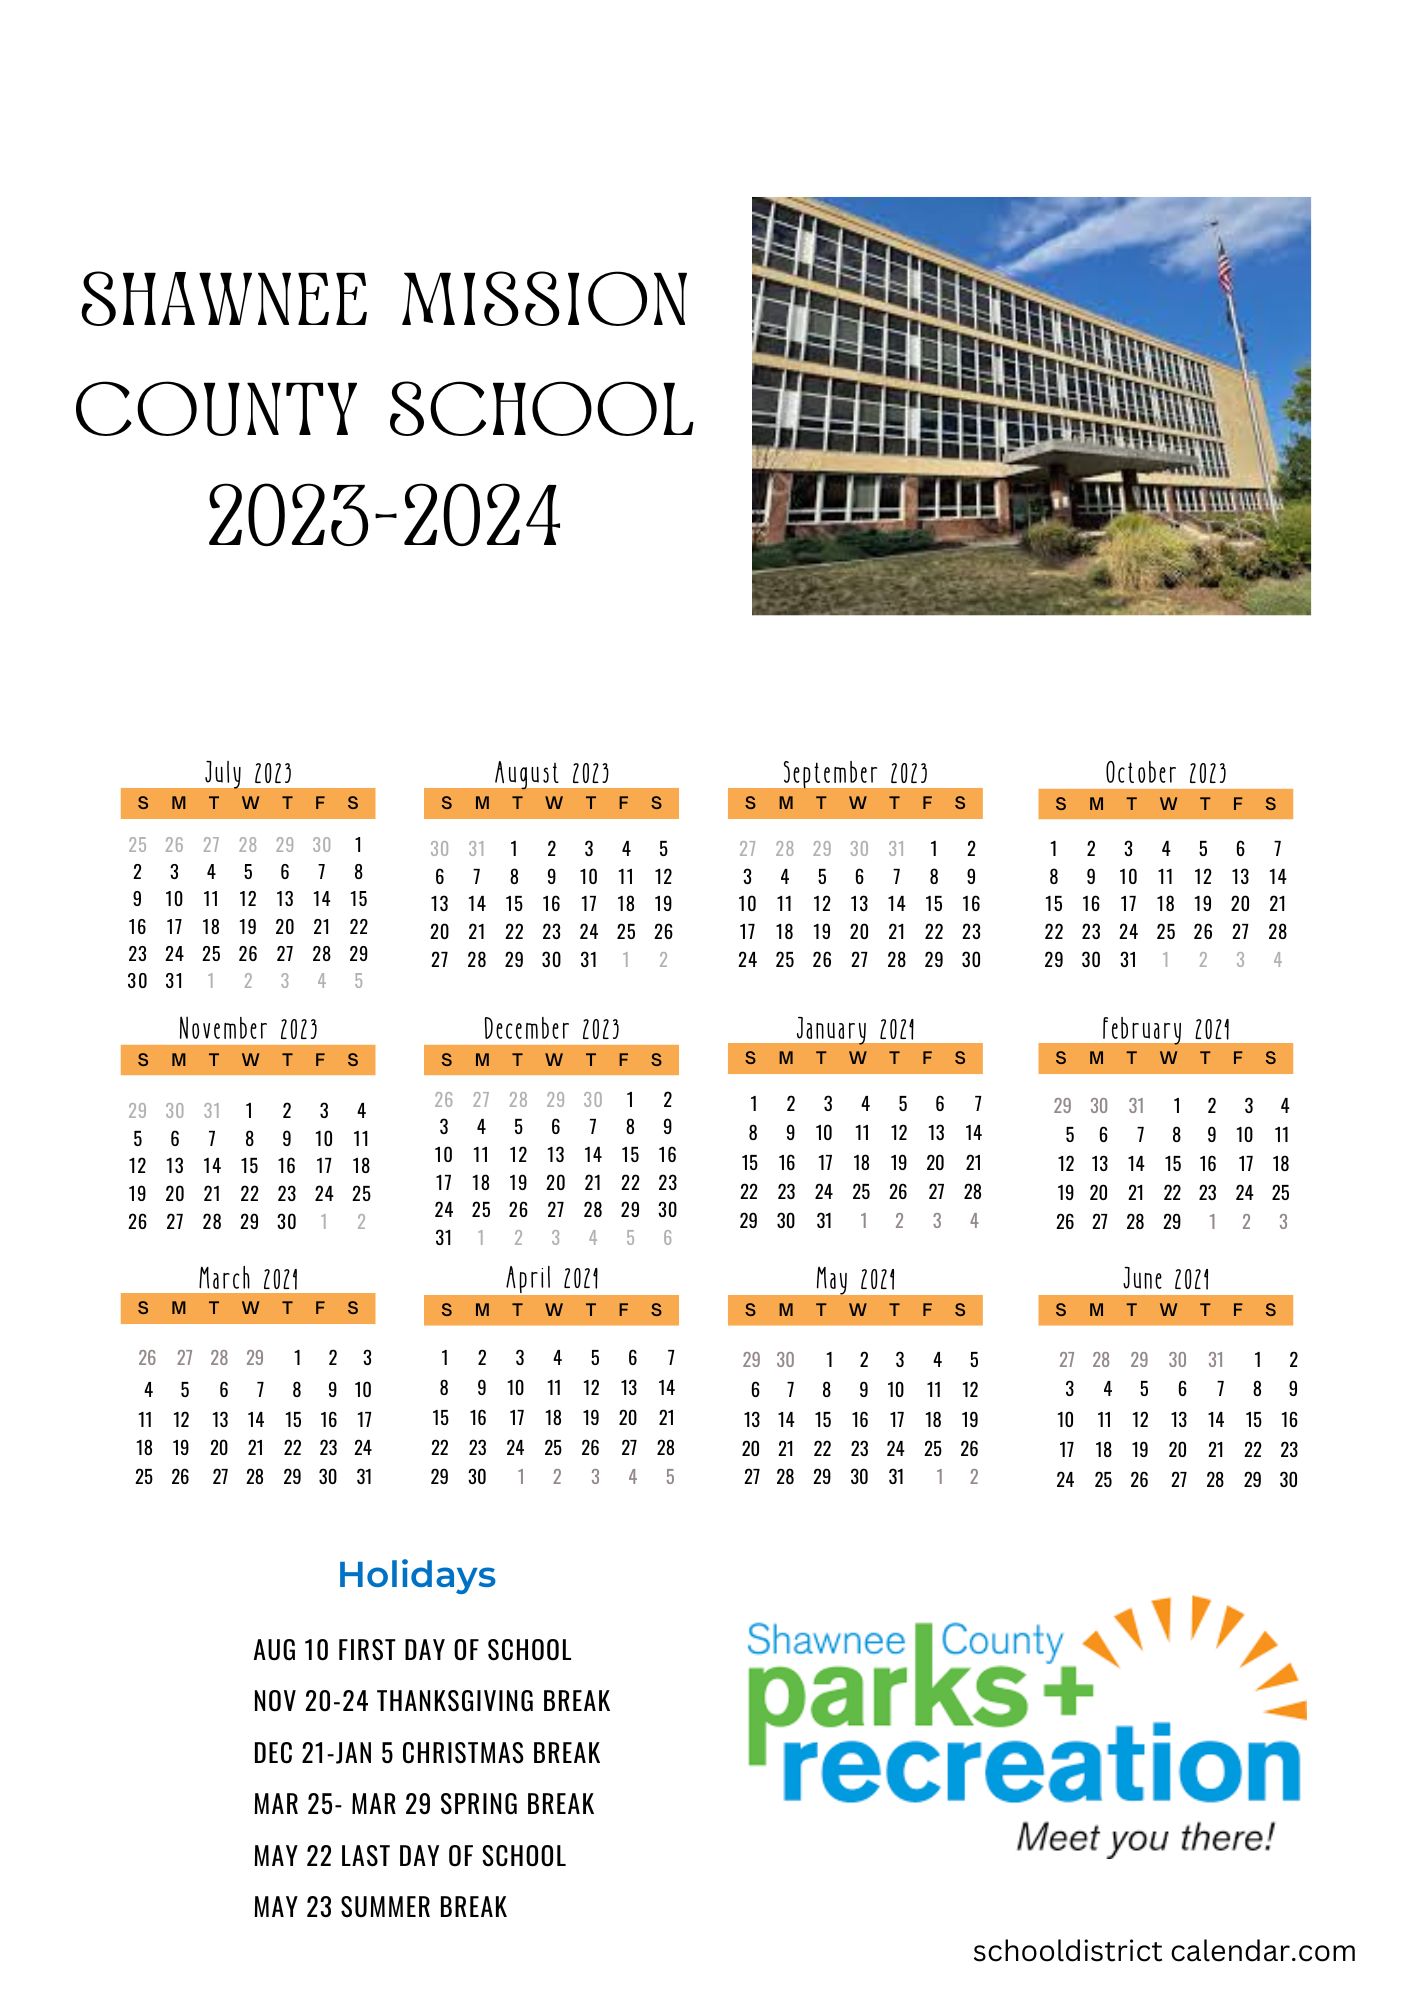 Shawnee Mission School District Calendar Holidays 2023 2024